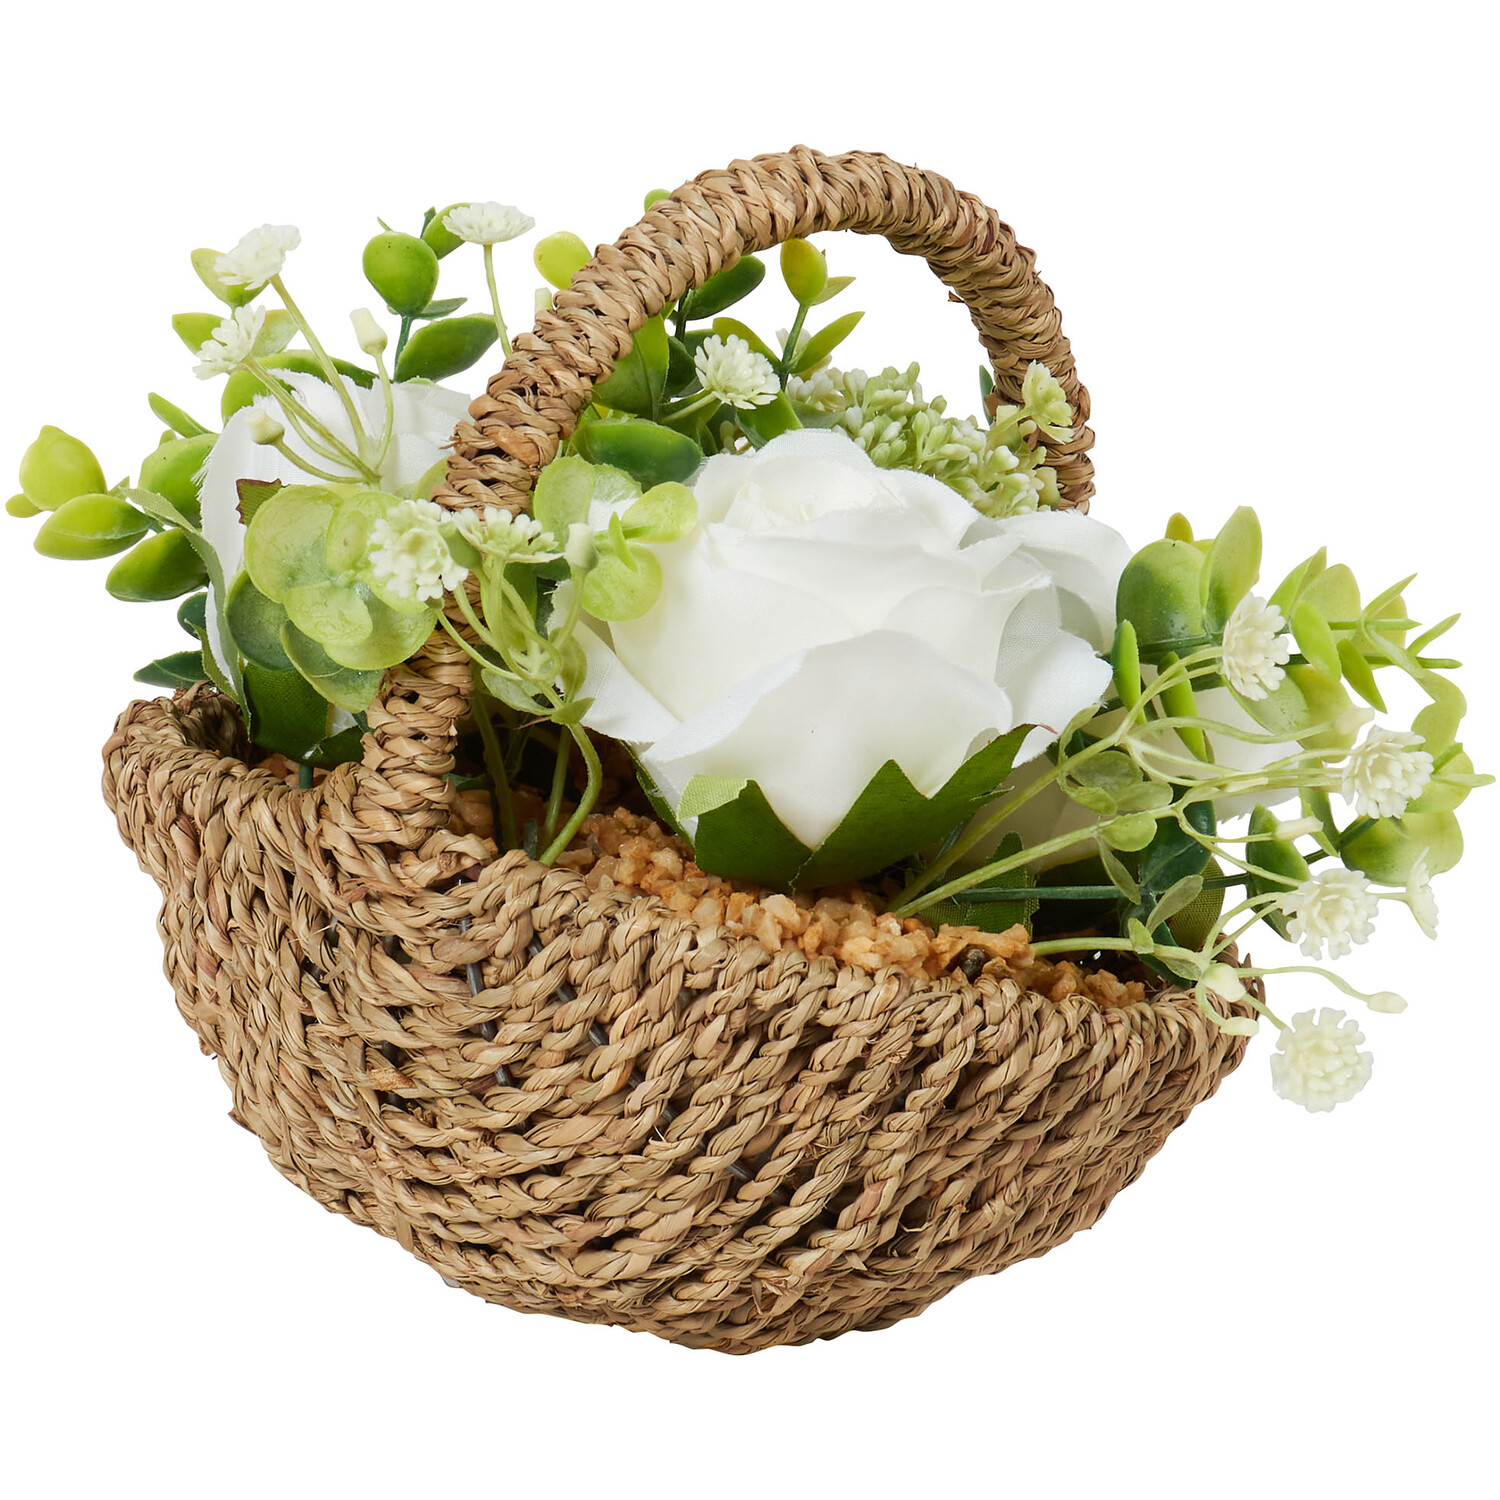 Rose Artificial Flower in Basket Image 3